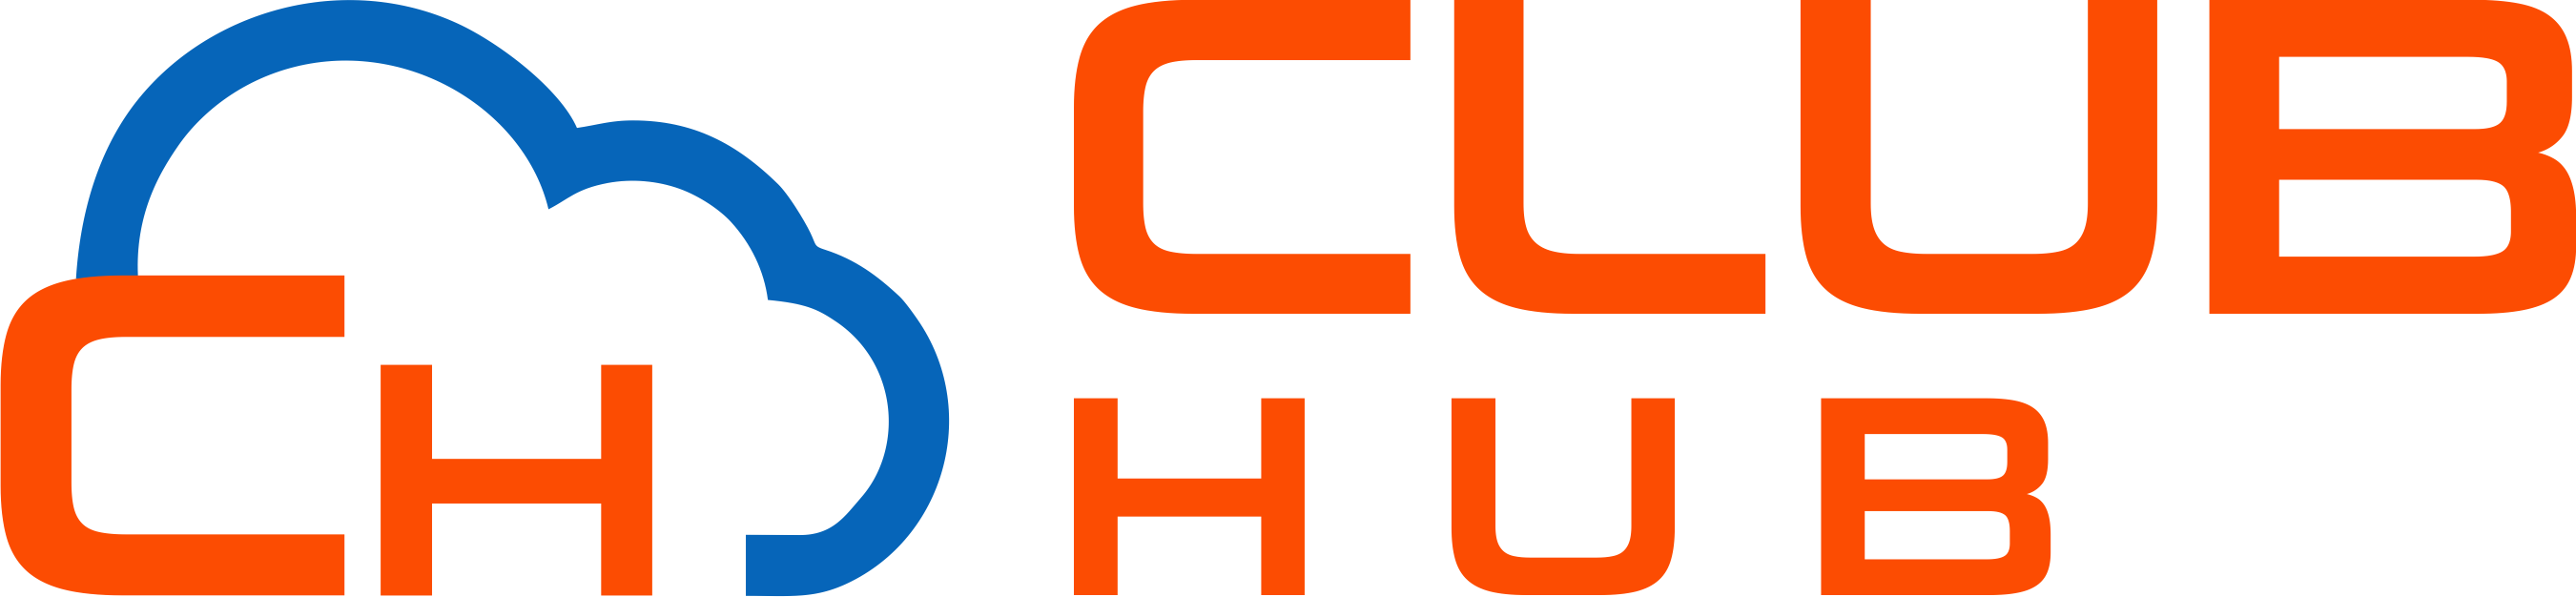 Logo_farbig